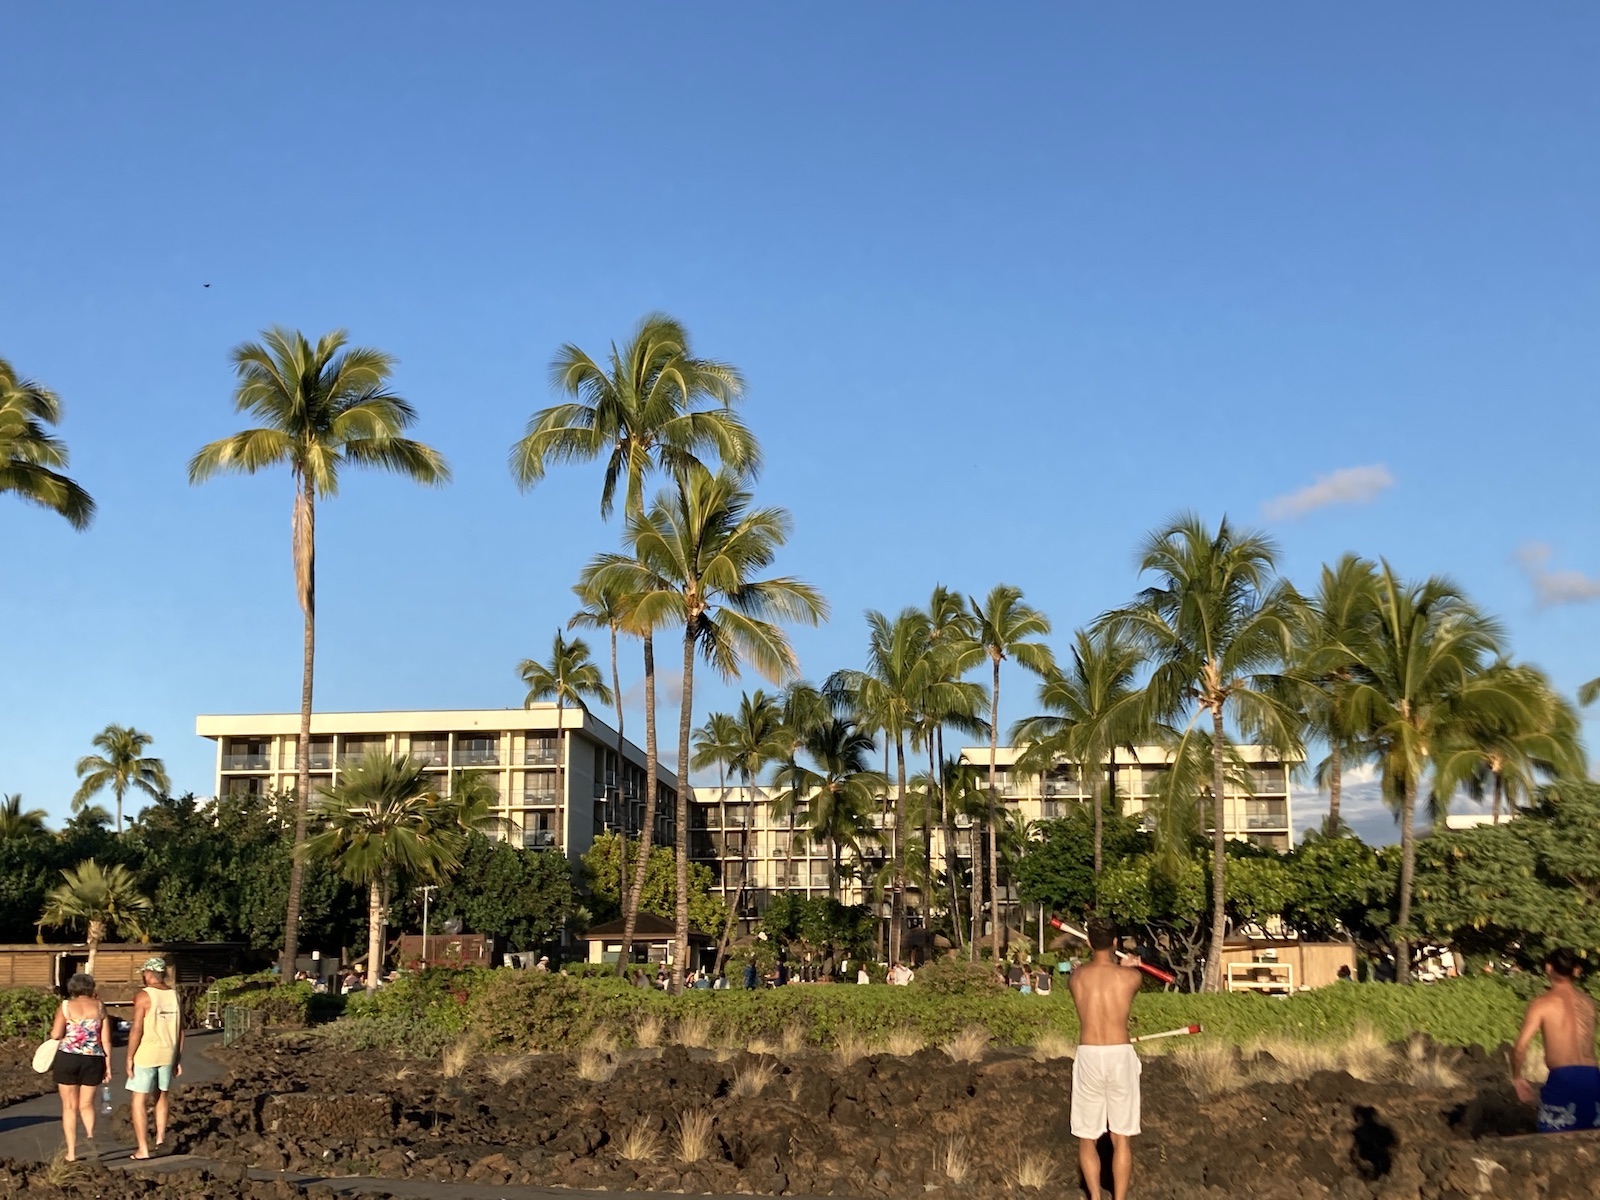 Photo looking back toward the Waikoloa Beach Marriott Resort Spa from the entrance to the beach